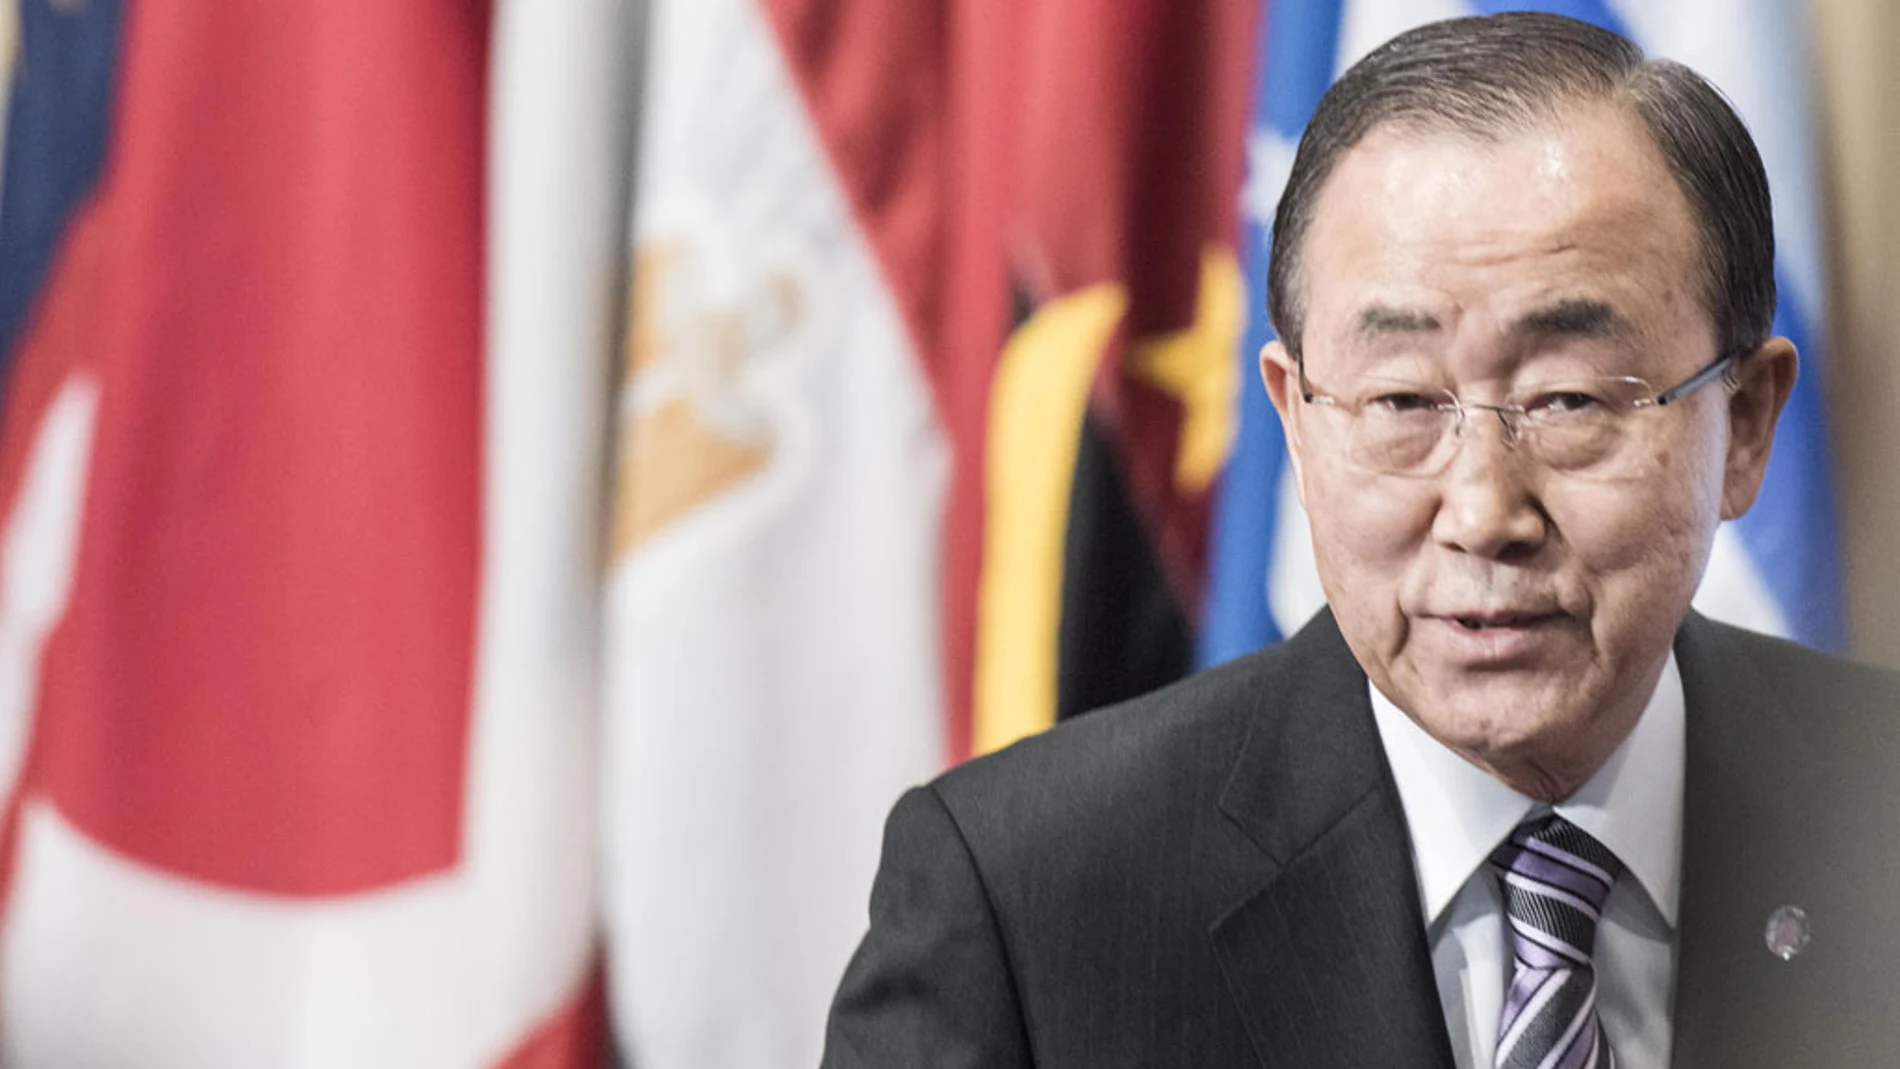 Ban Ki-moon, Secretario General de la ONU. Foto de archivo ONU/Mark Garten